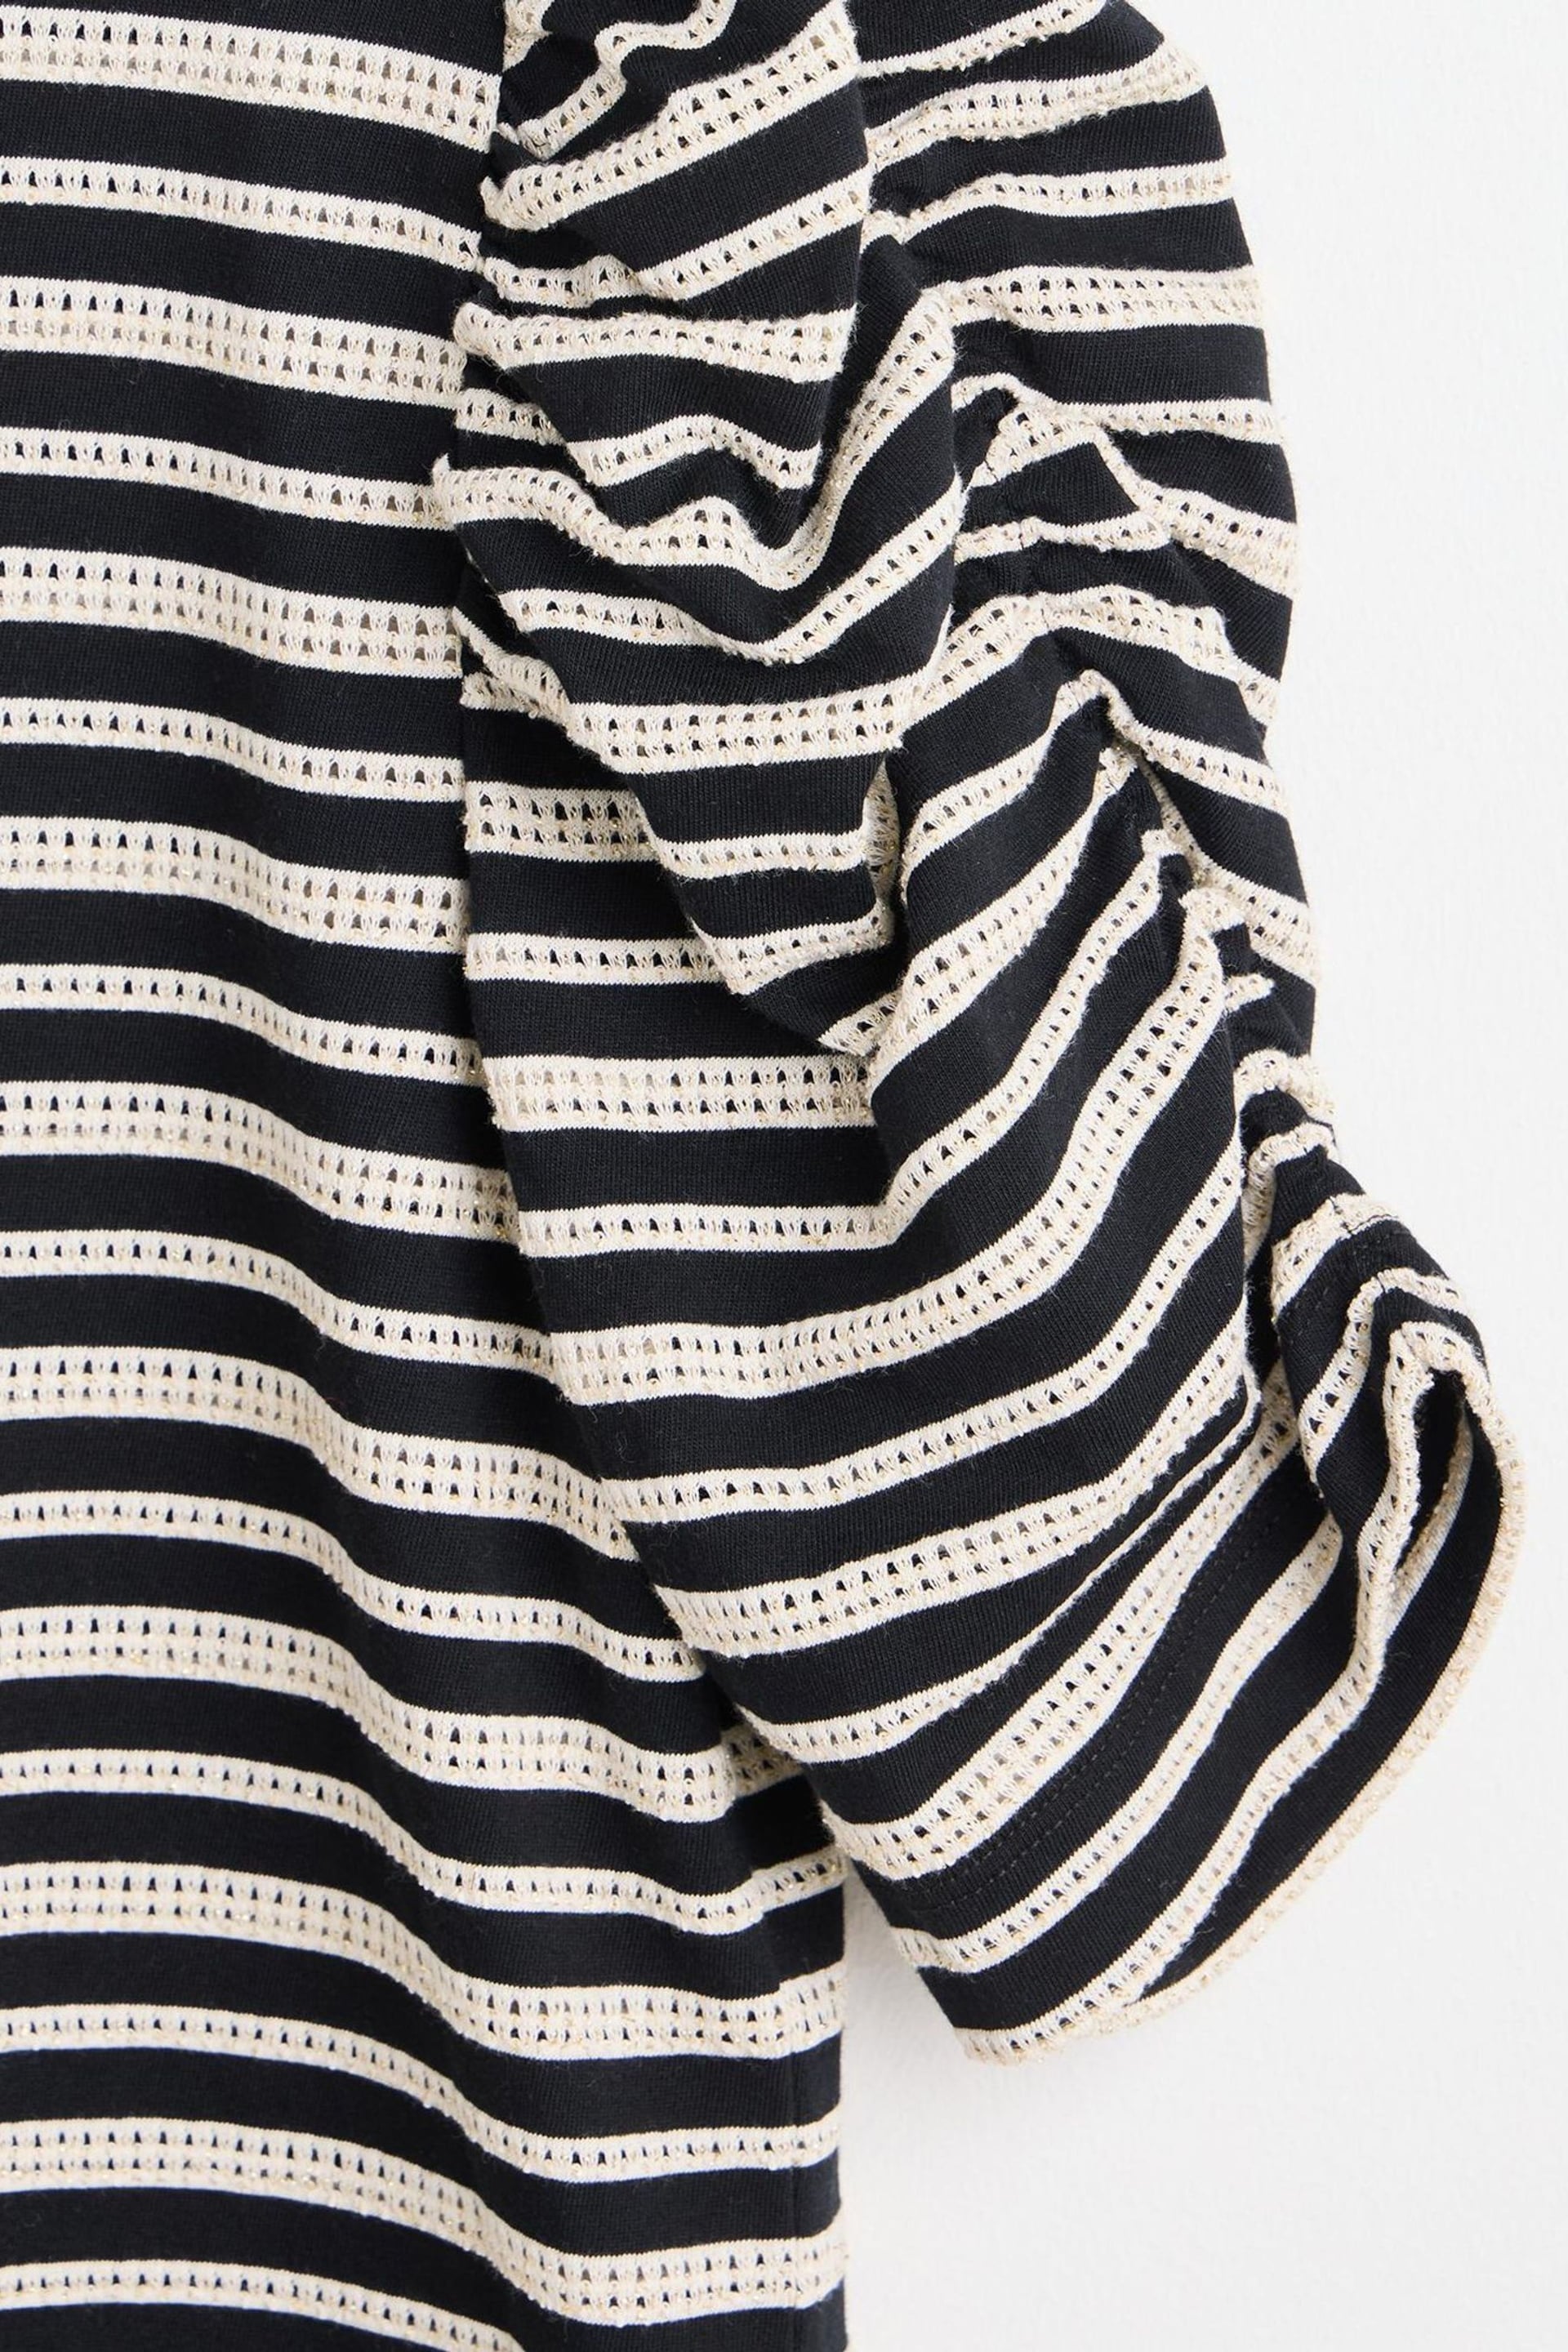 Oliver Bonas Black Stripe Ruched Sleeve Jersey Top - Image 4 of 5